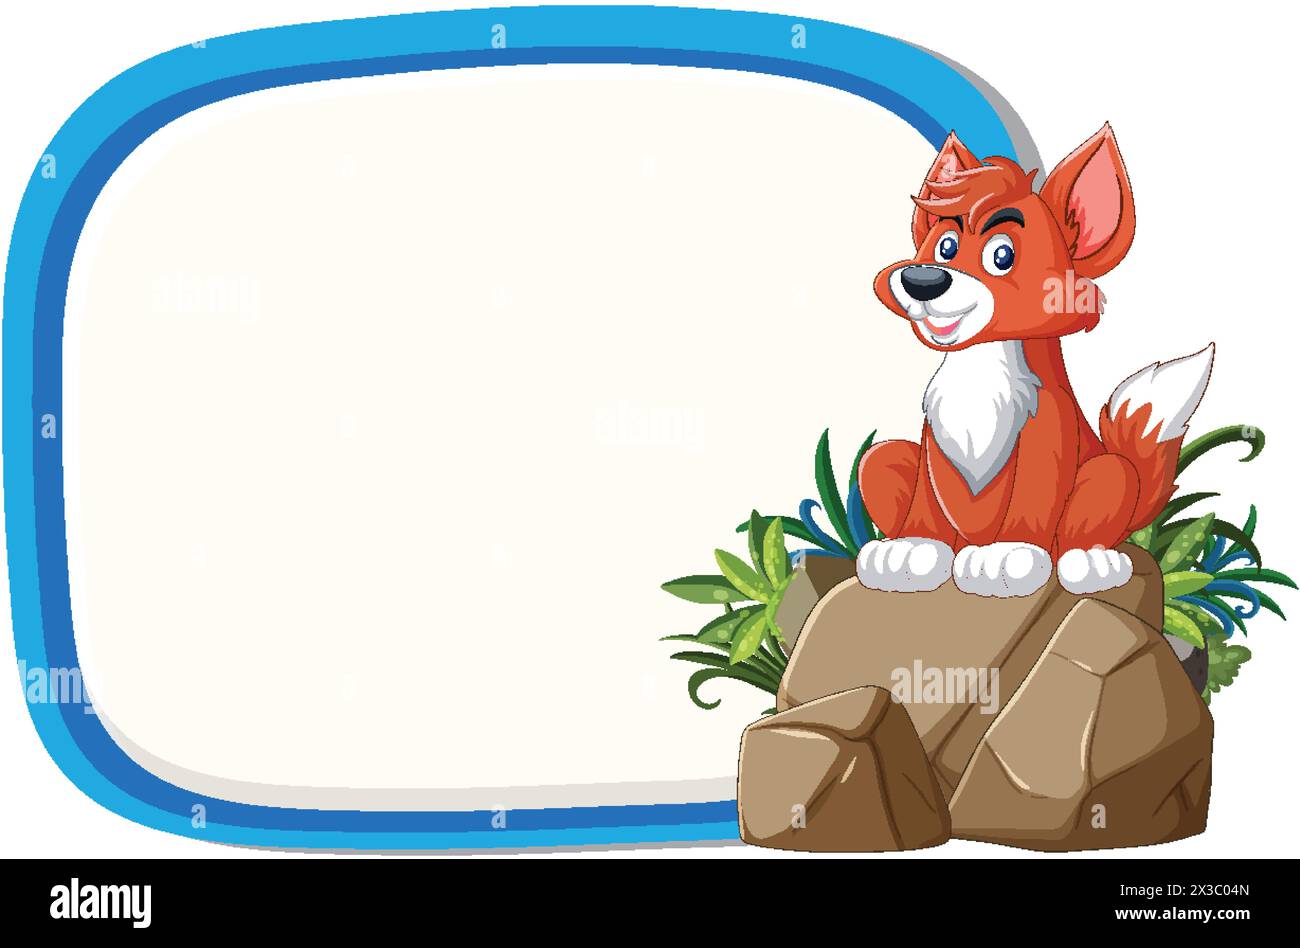 Cartoon fox illustration with blank text space Stock Vector